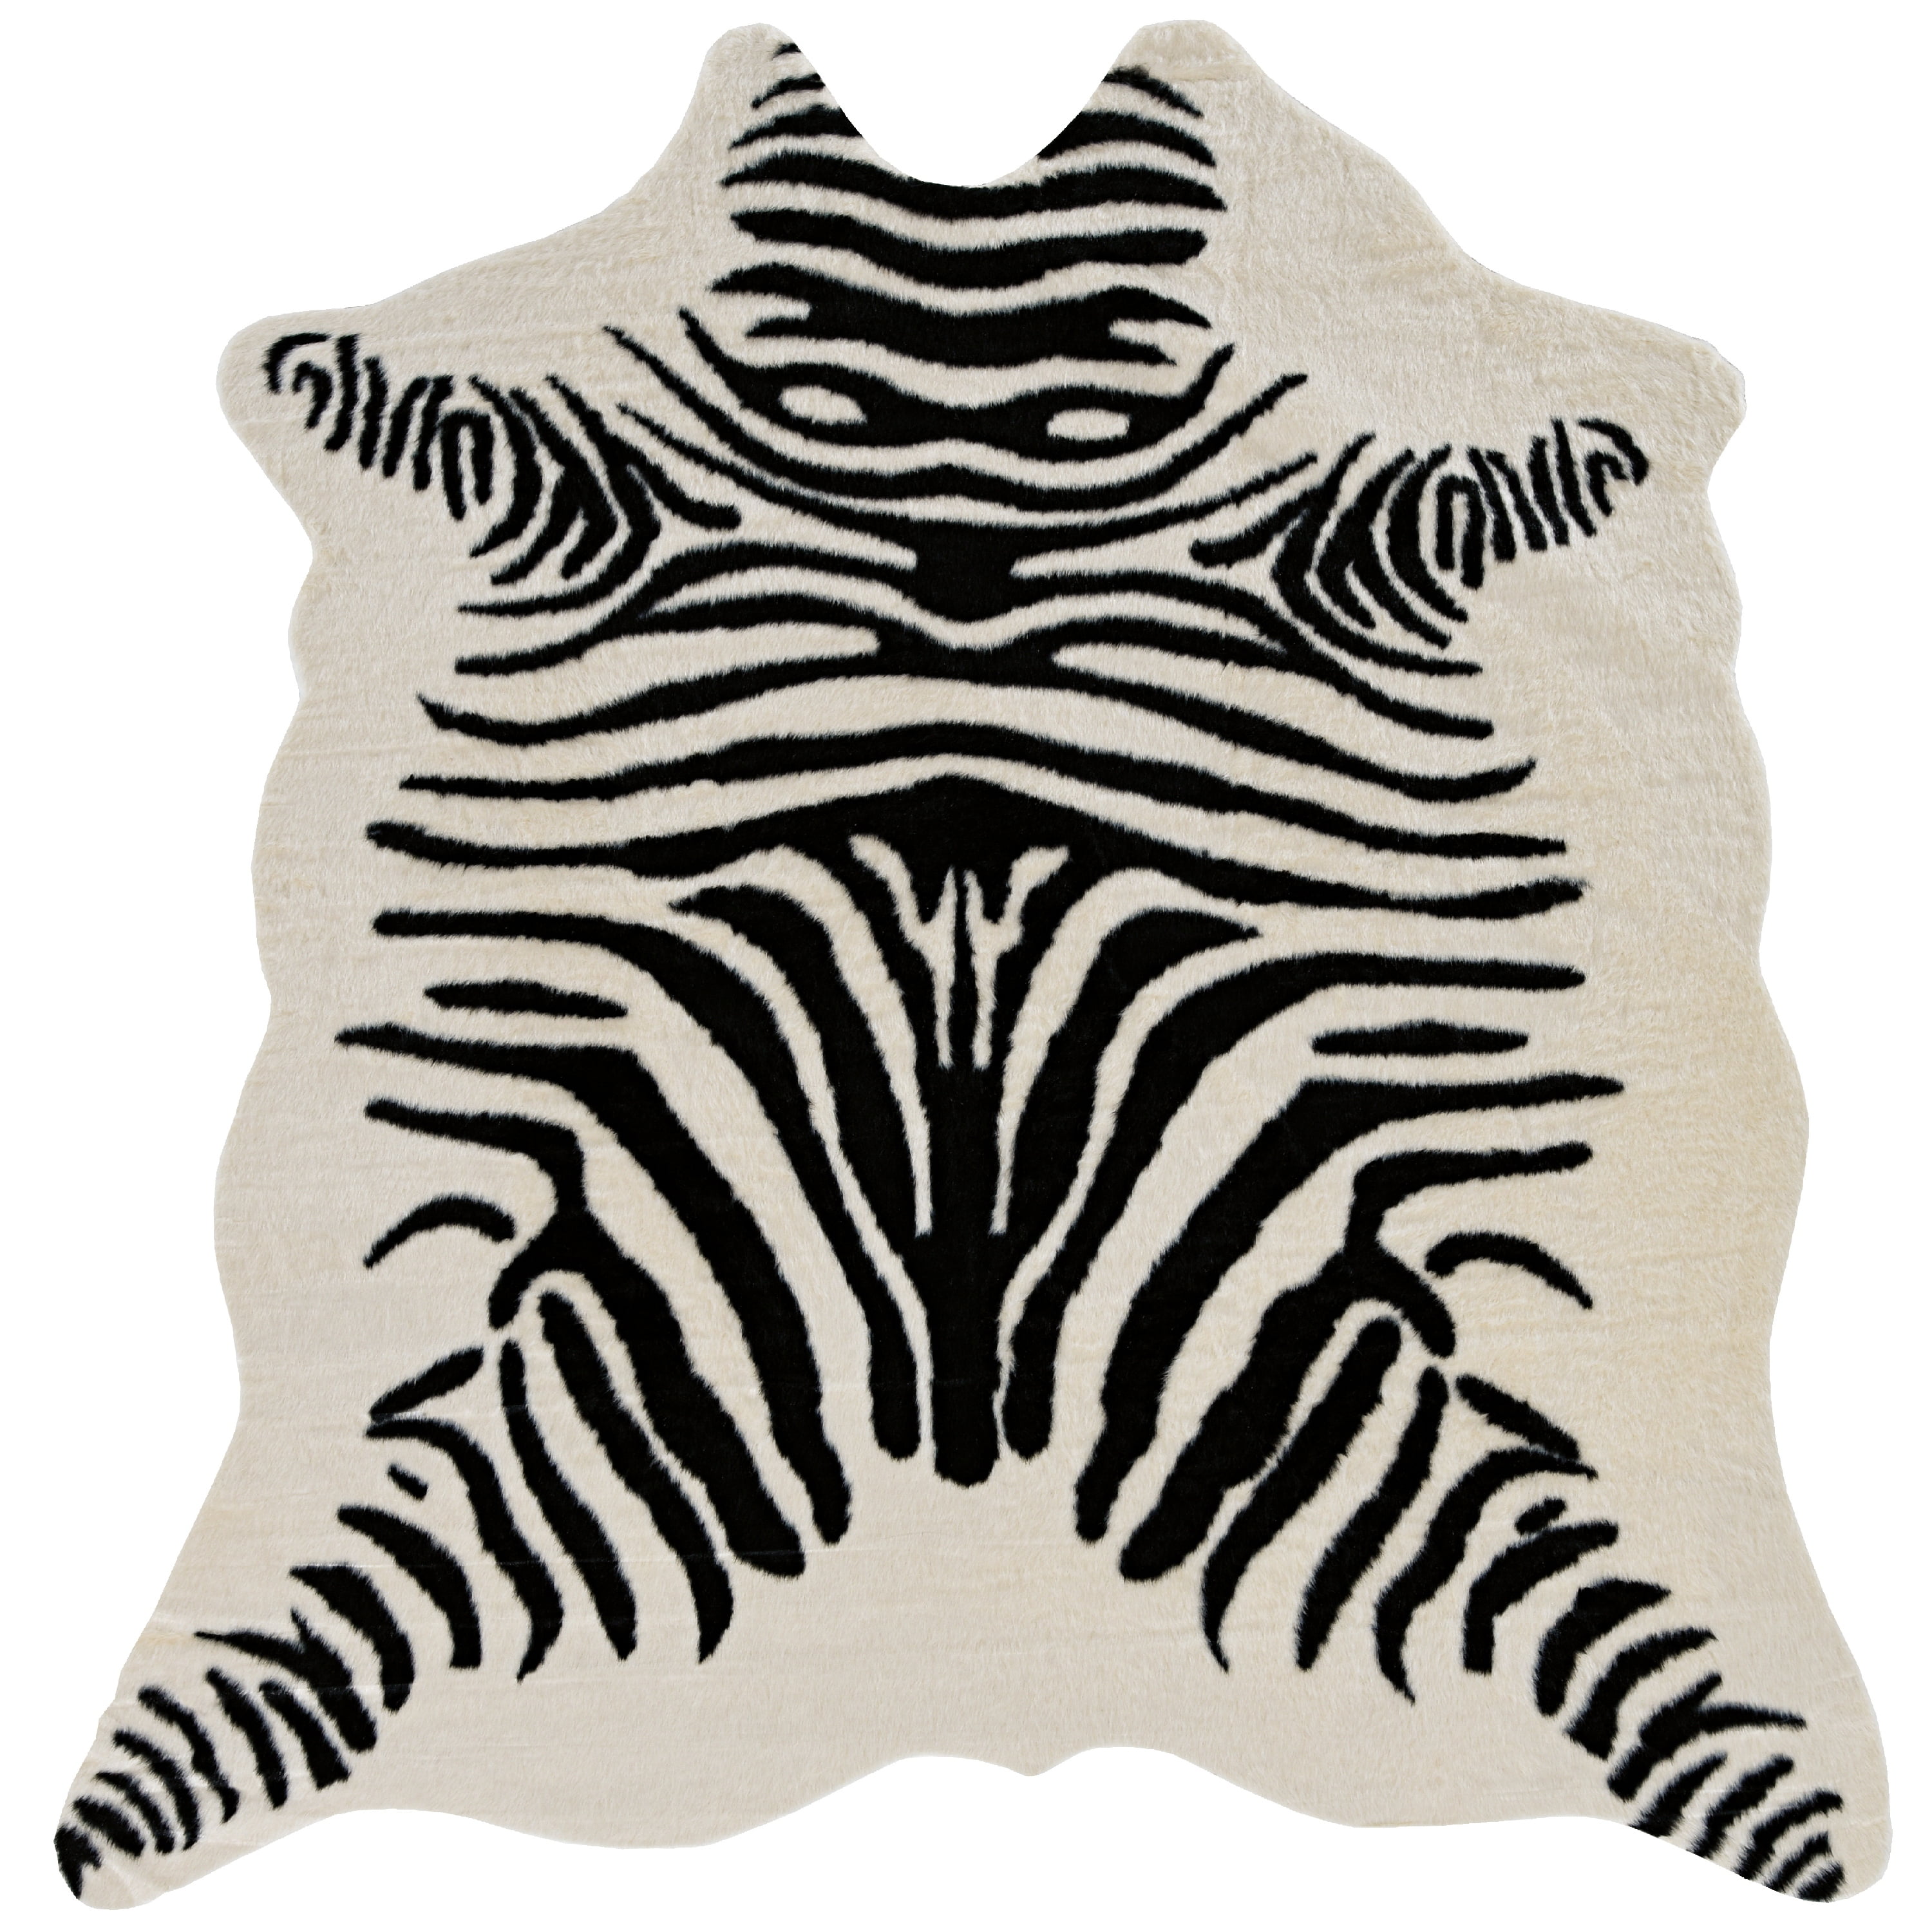 Zebra Print Rug 5.2x4.6 Feet Faux Zebra Hide Rug Animal Printed Carpet For Home 